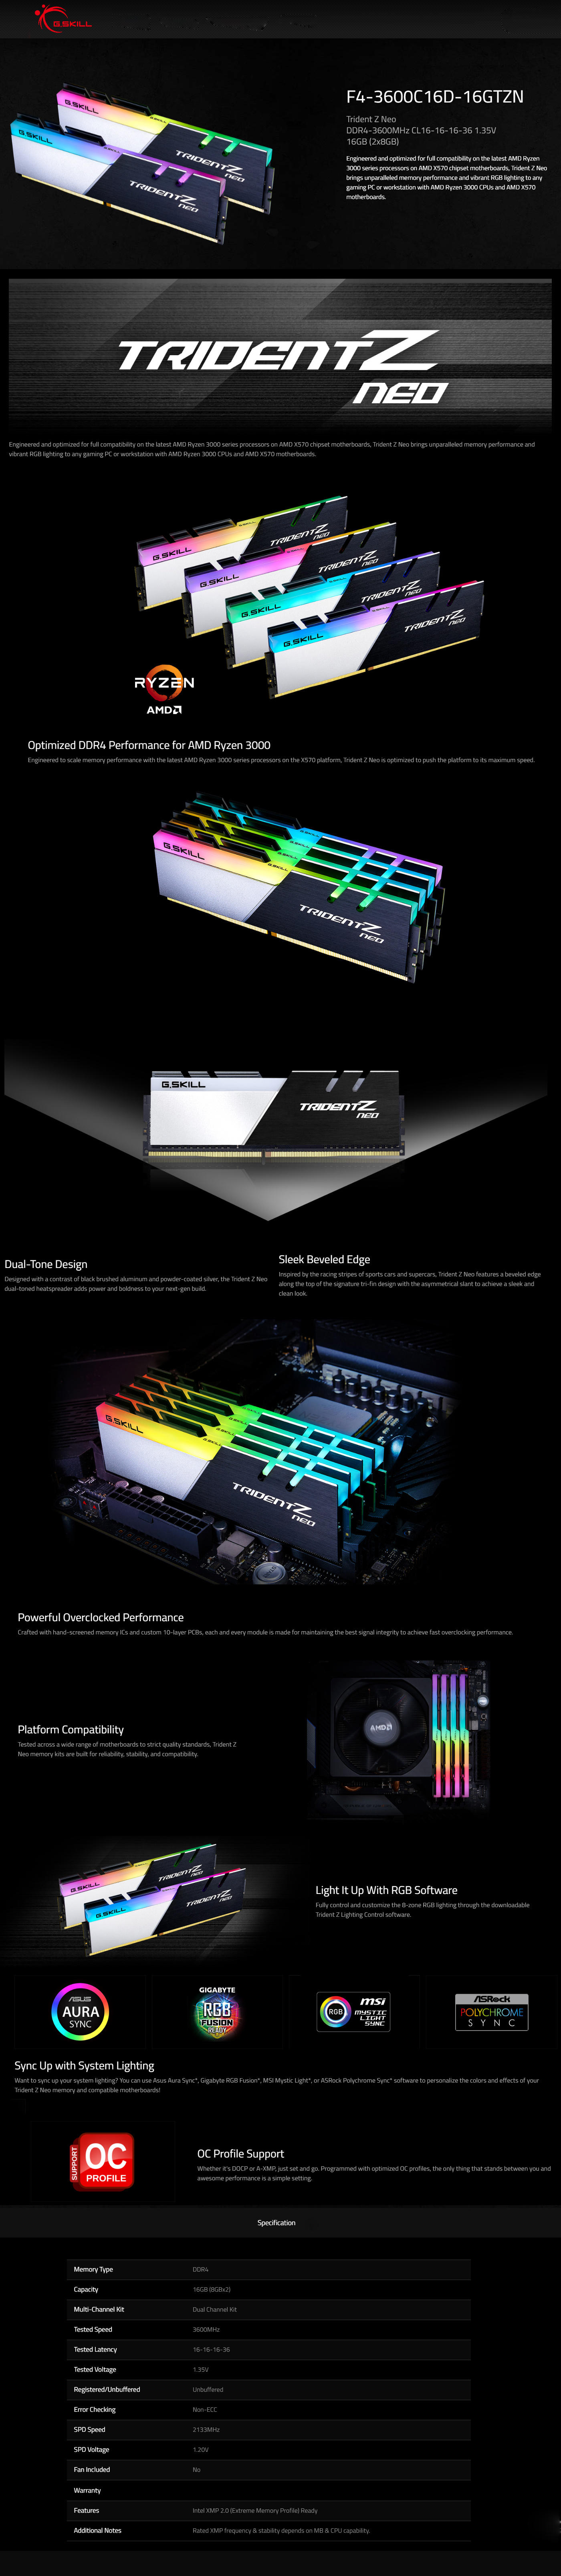 Buy Online G.skill Trident Z Neo 16GB (2 x 8GB) DDR4 3600MHz Desktop RAM (F4-3600C16D-16GTZN)